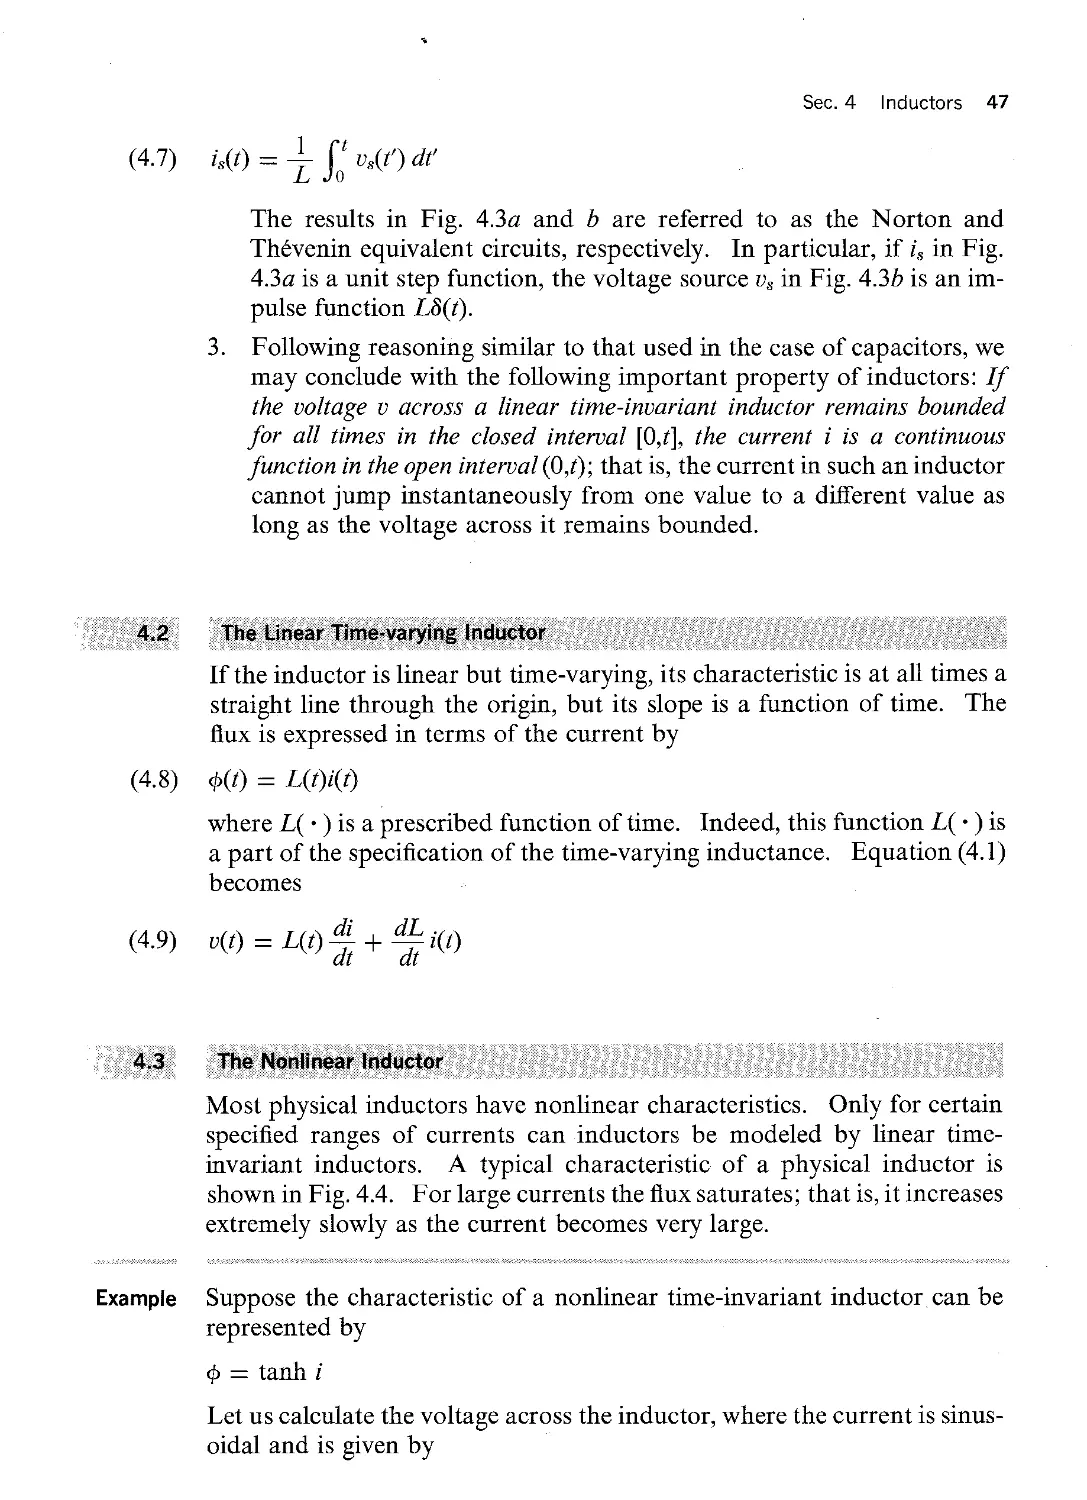 3.2 - Nonlinear Case